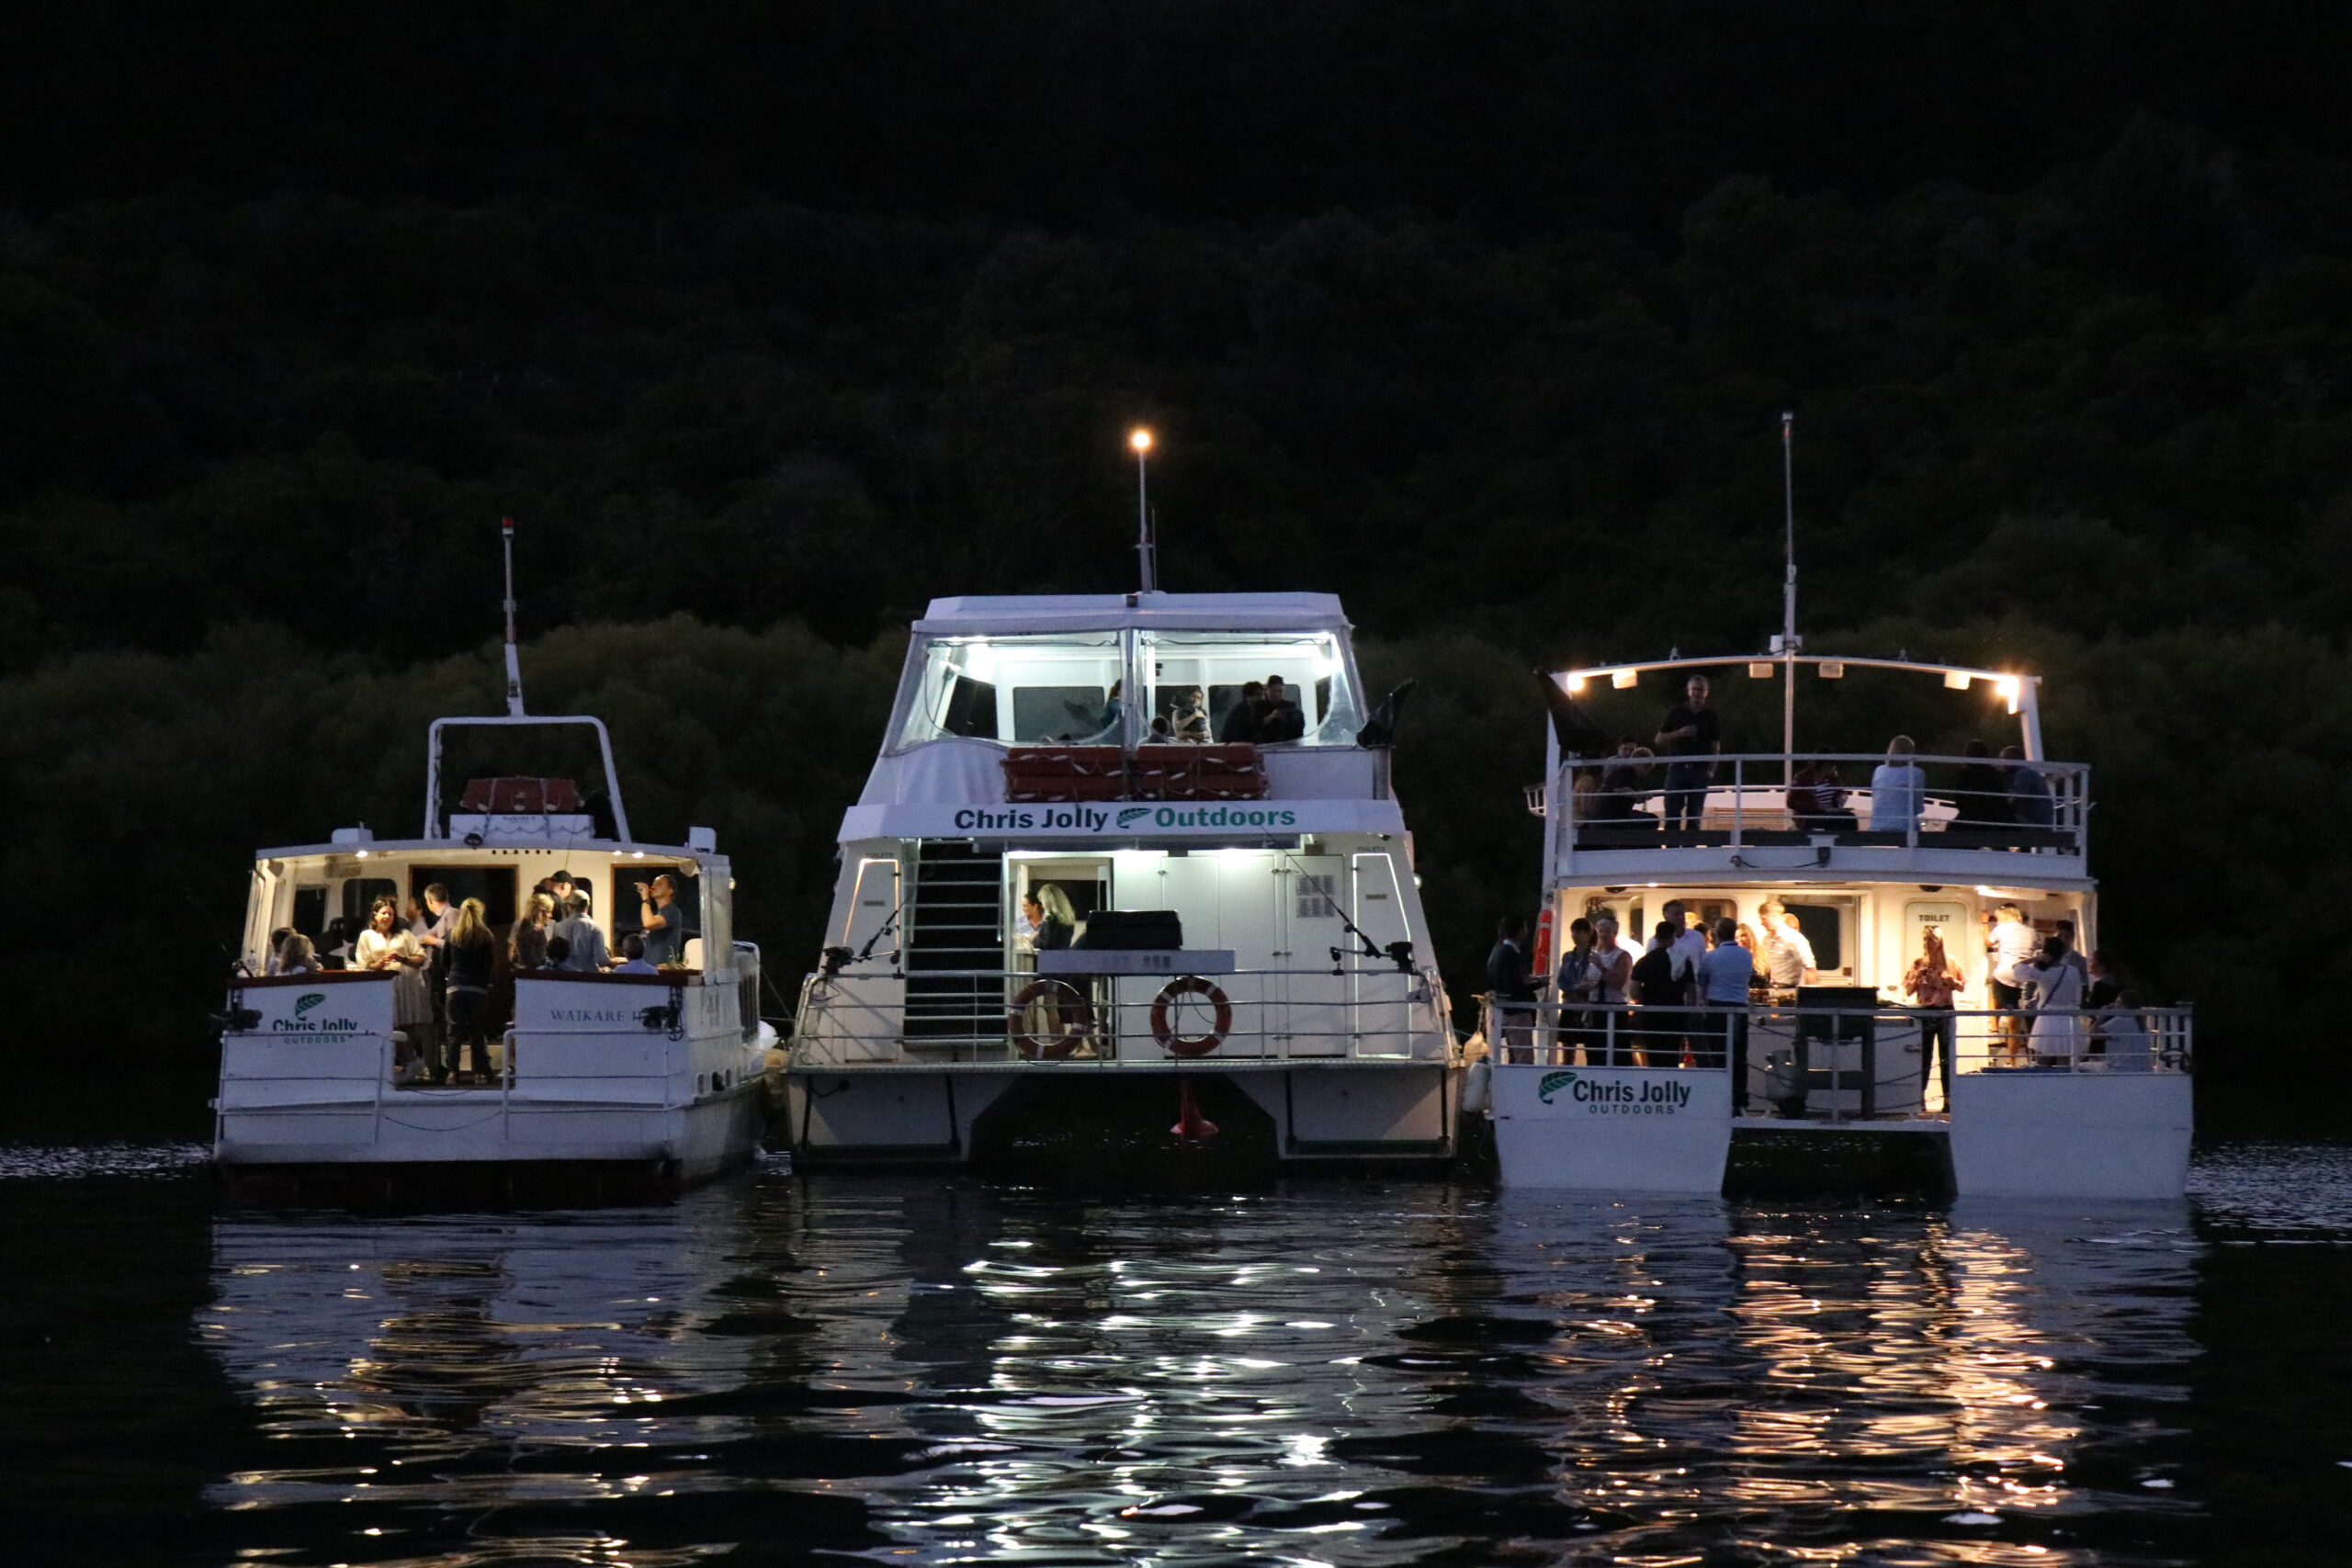 Chris jolly fleet of boats lake taupo nz night time